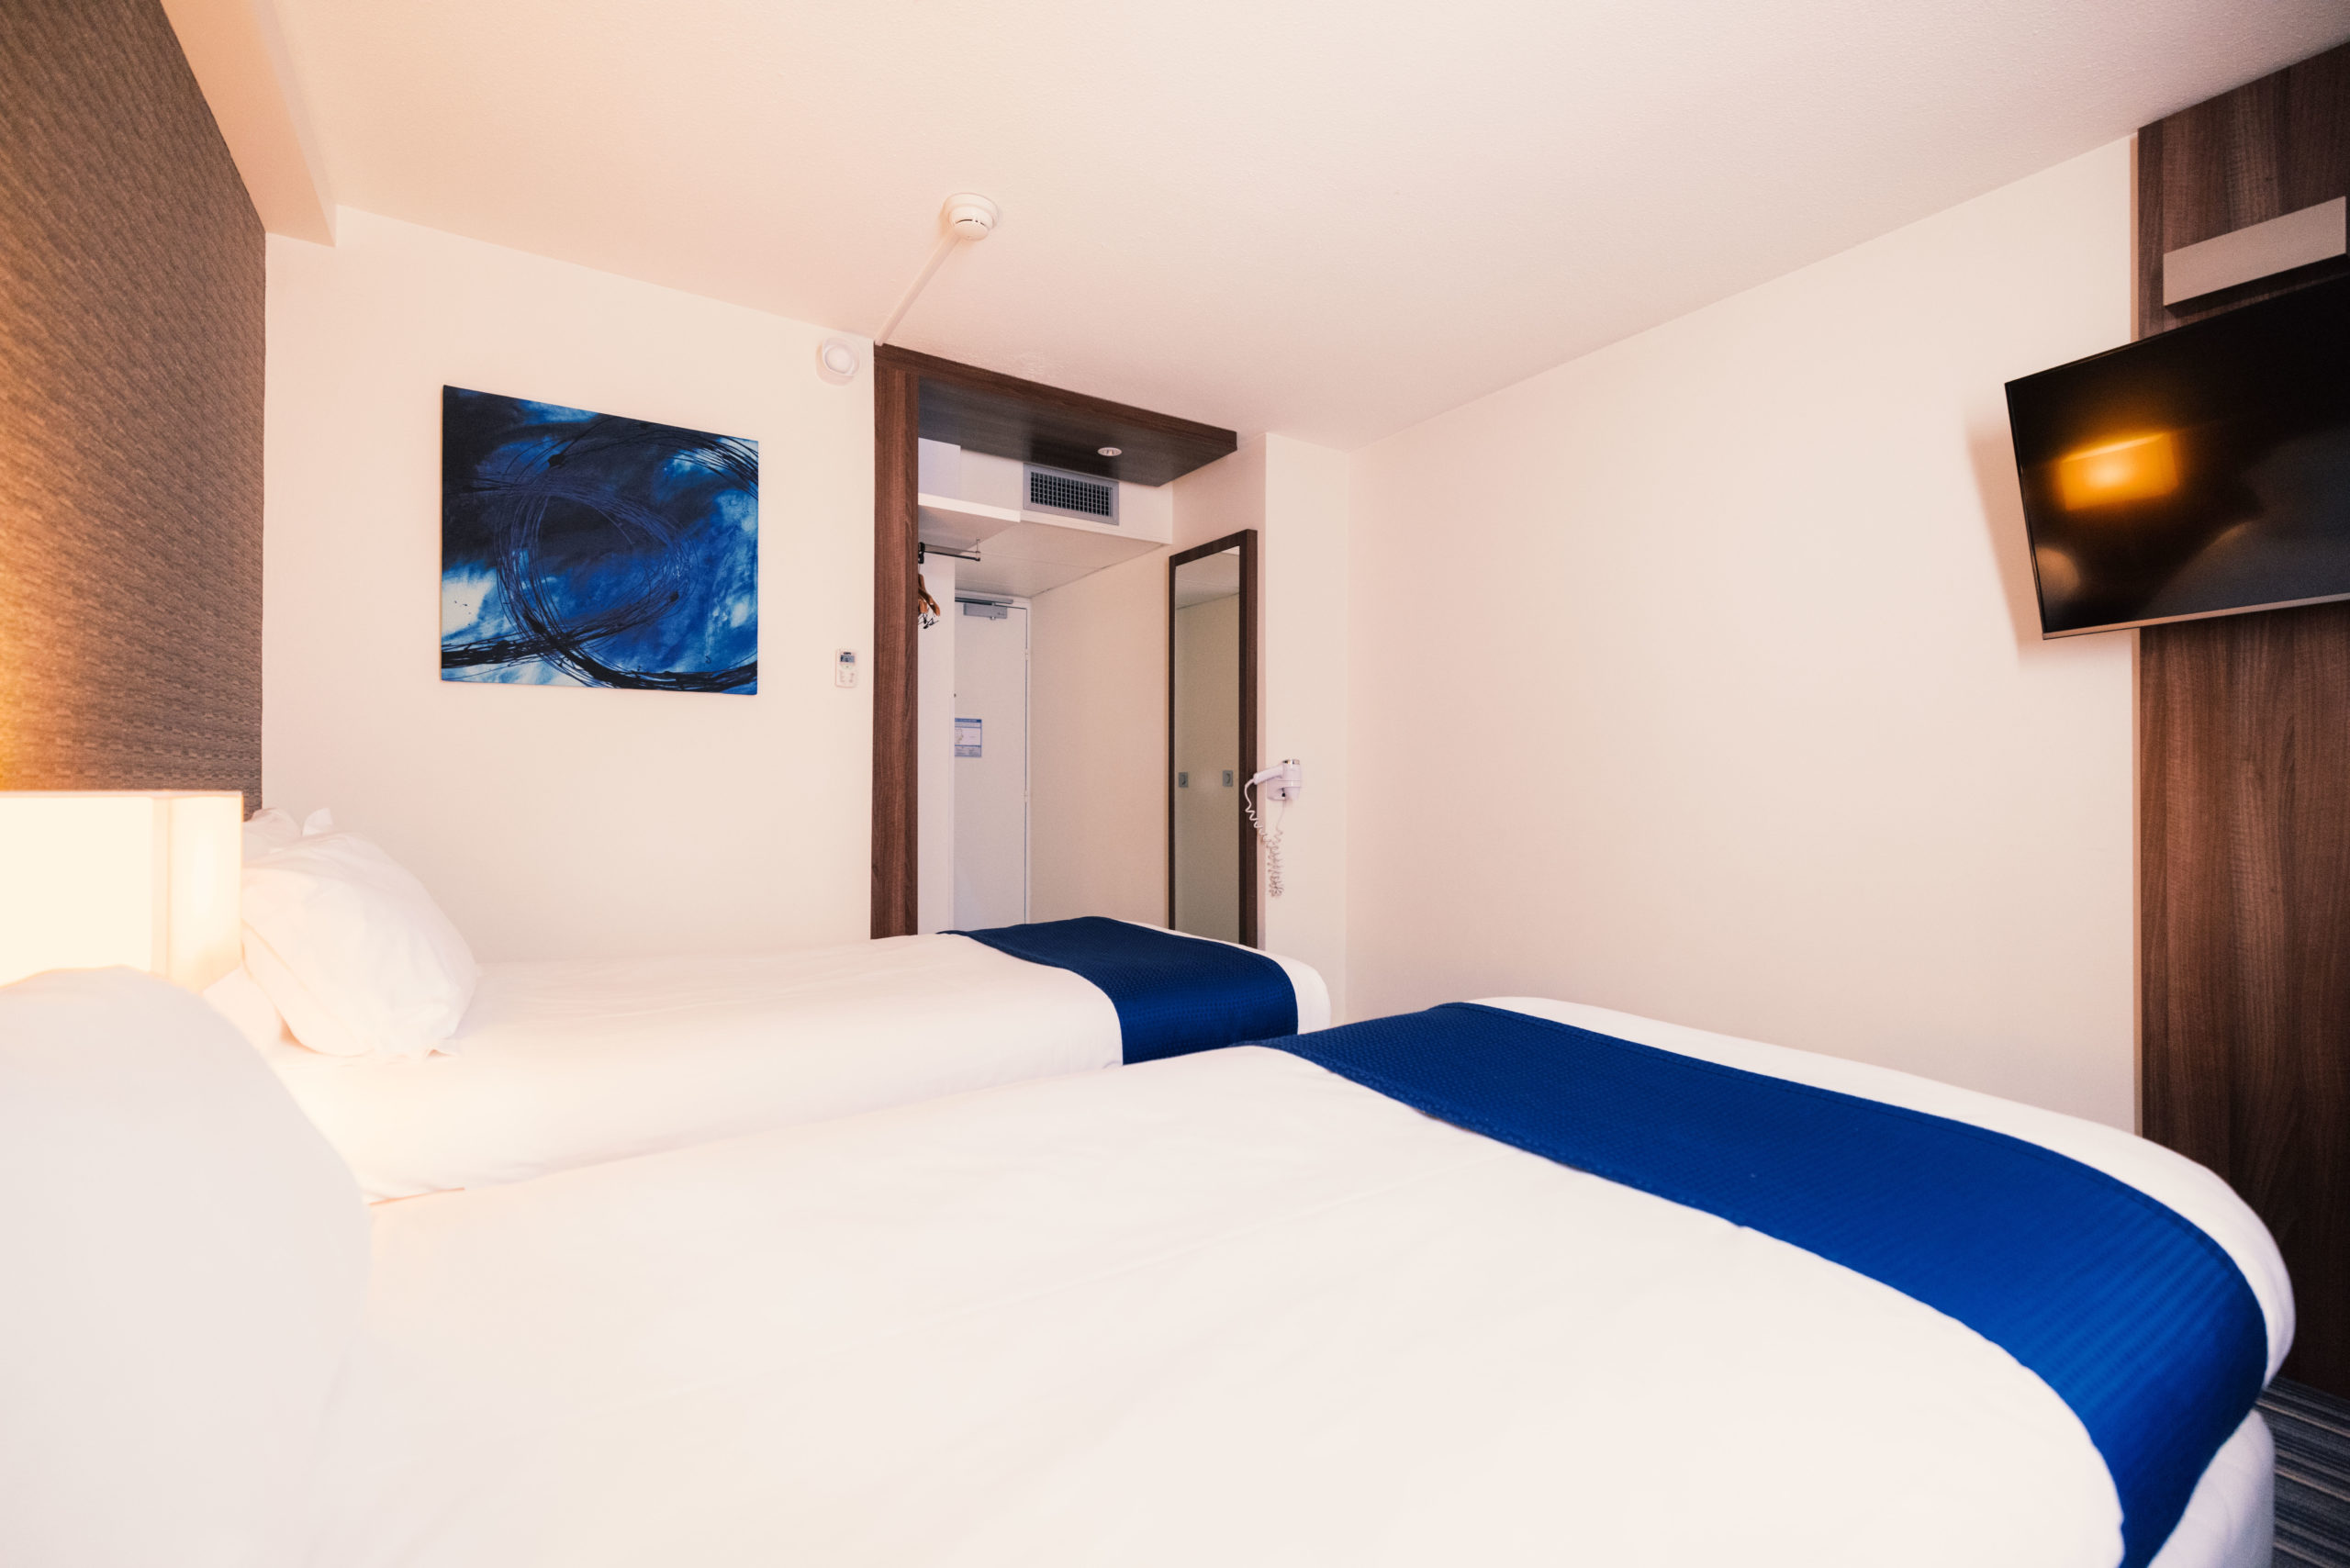 Chambre avec lits jumeaux standard - Hotel Holiday Inn Express Lille - Pge d'accueil et Chambre